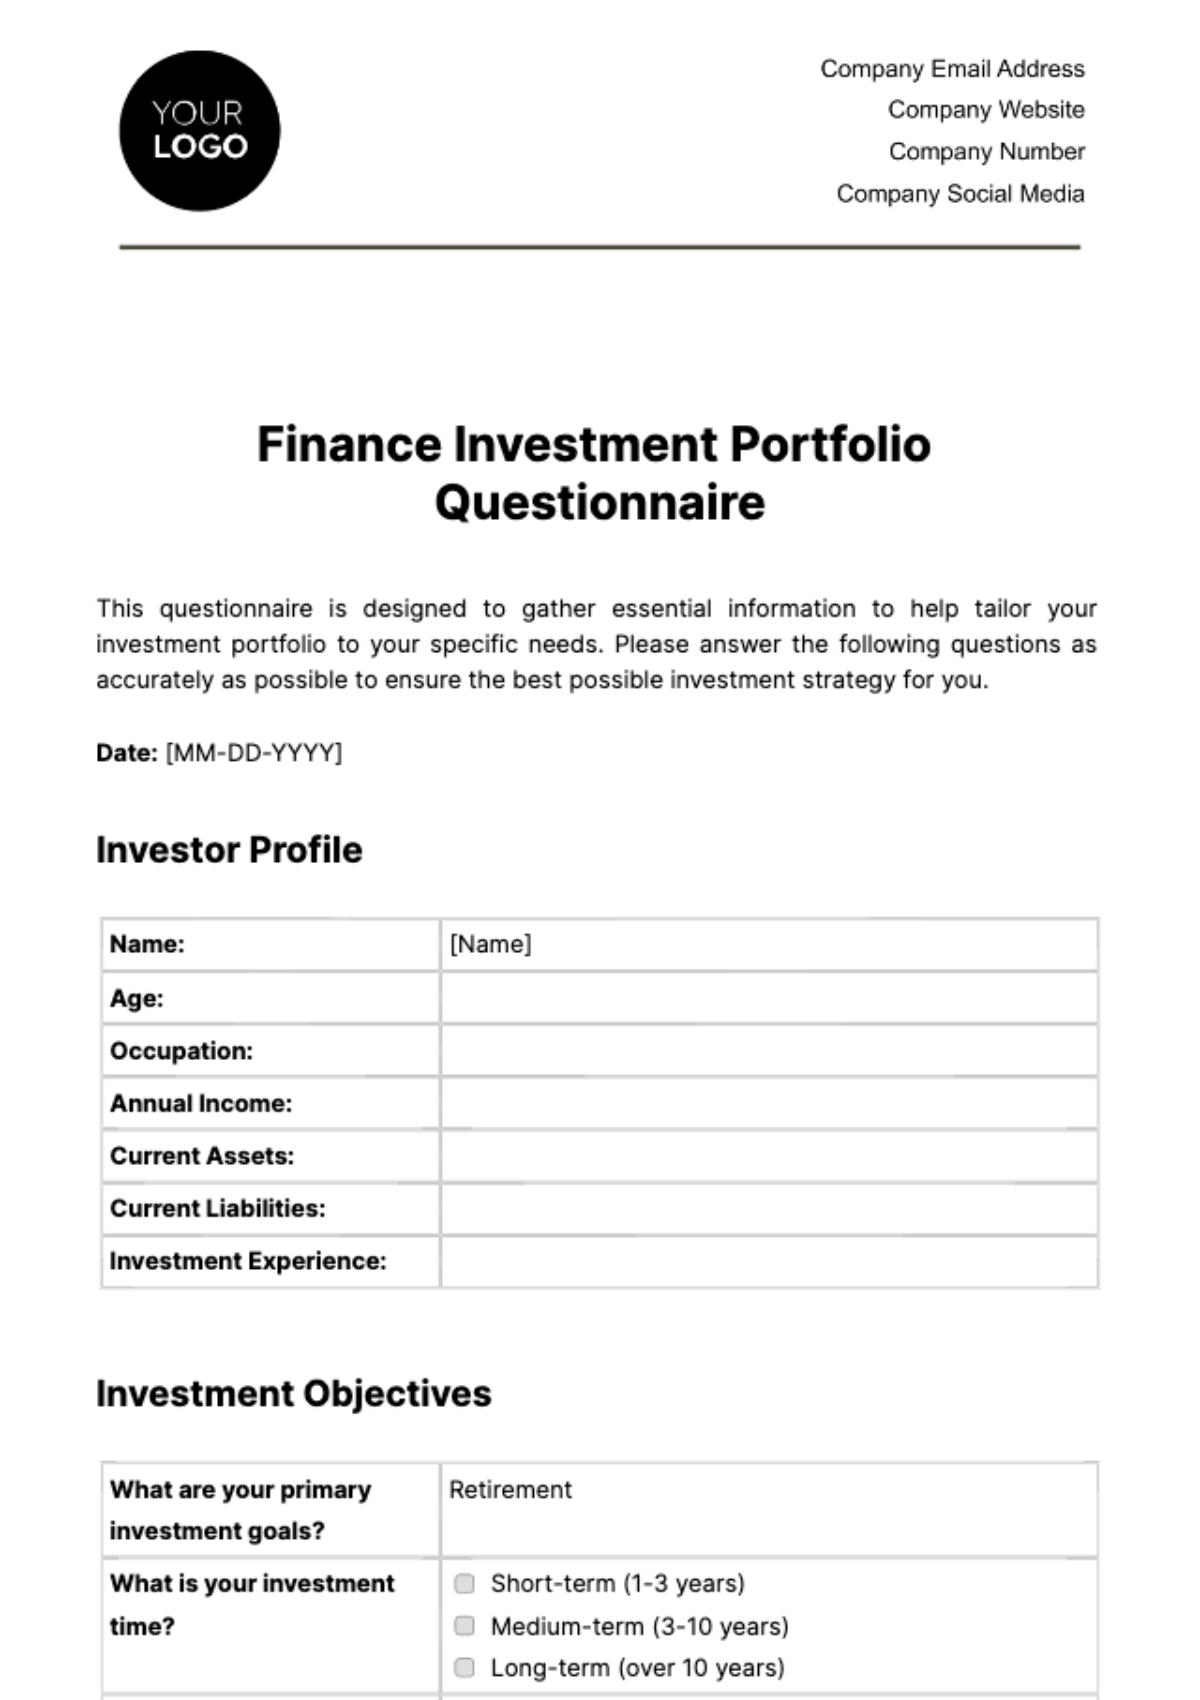 Finance Investment Portfolio Questionnaire Template